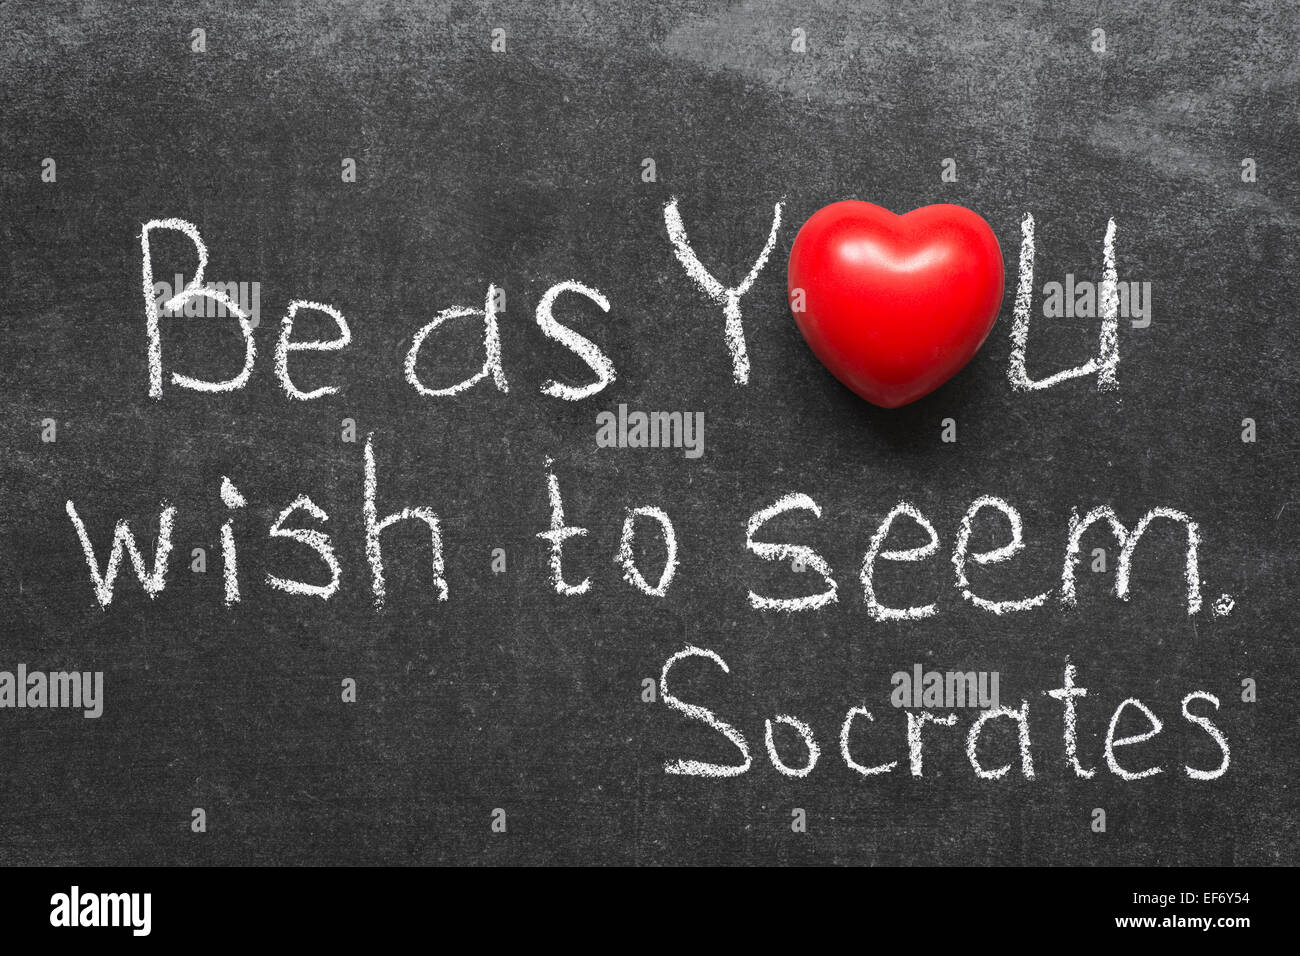 Be as you wish to seem - ancient Greek philosopher Socrates quote interpretation handwritten on blackboard Stock Photo